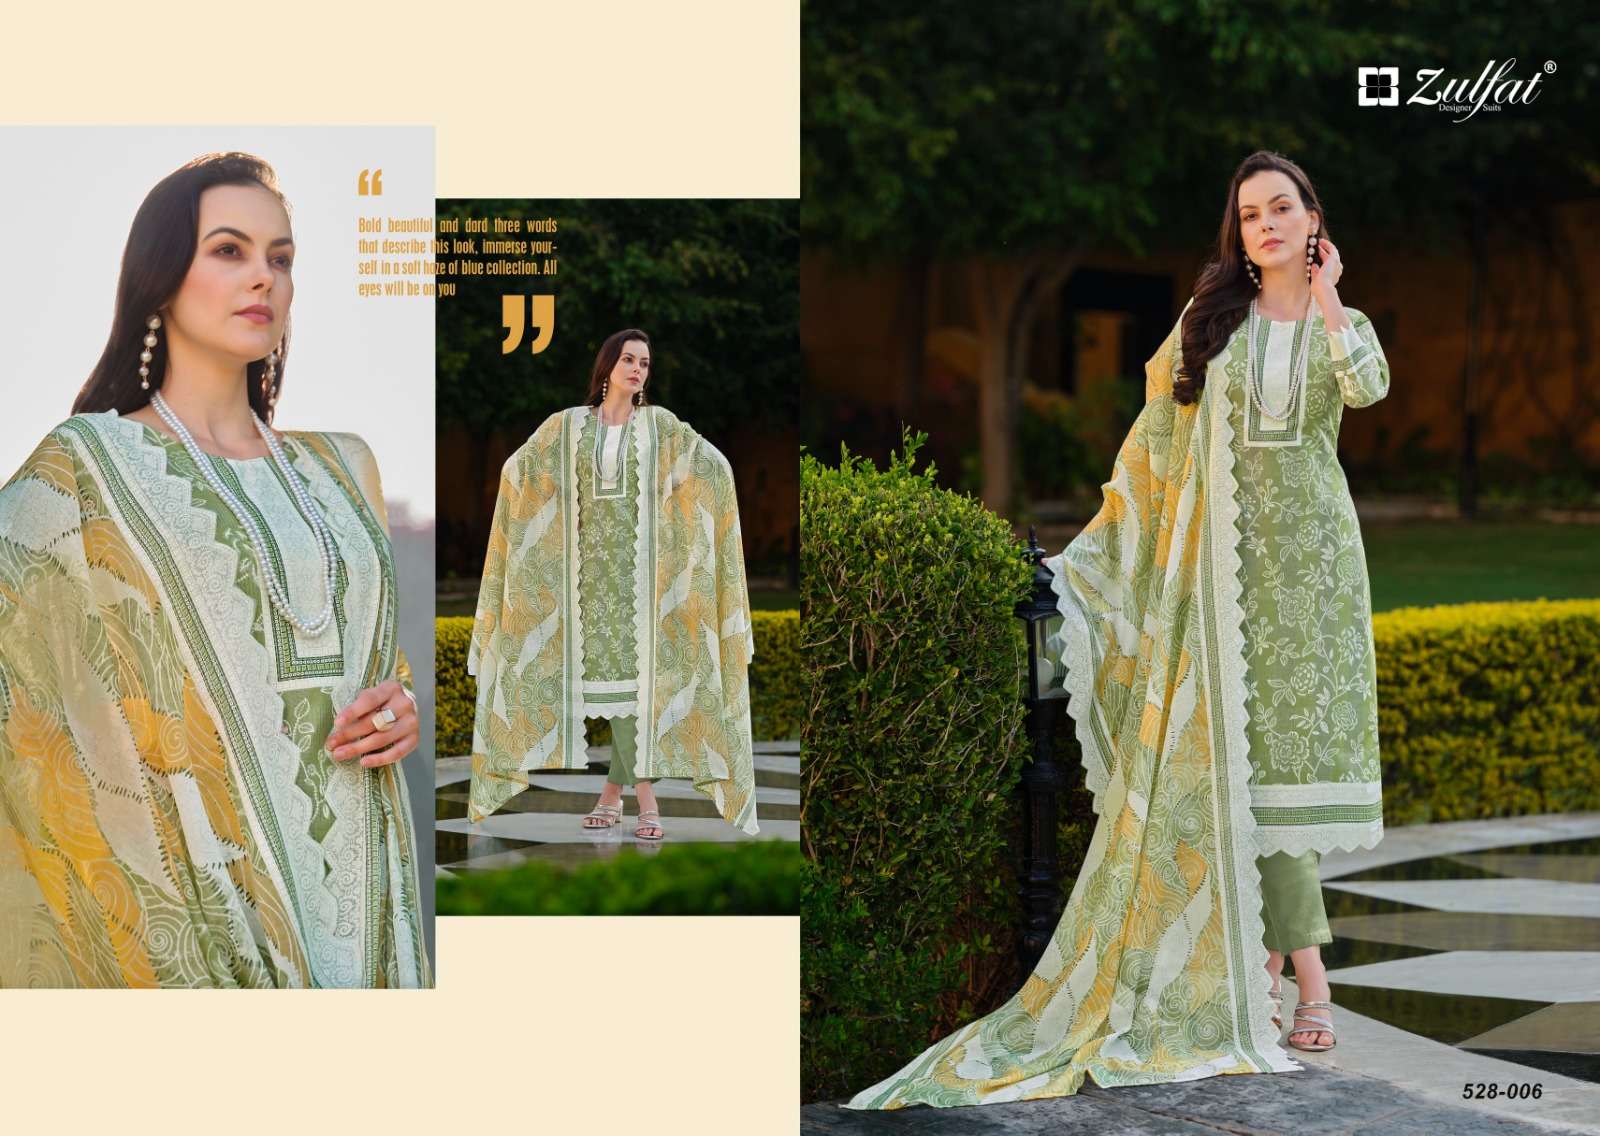 zulfat designer suits farhan cotton mal elegant look salwar suit catalog